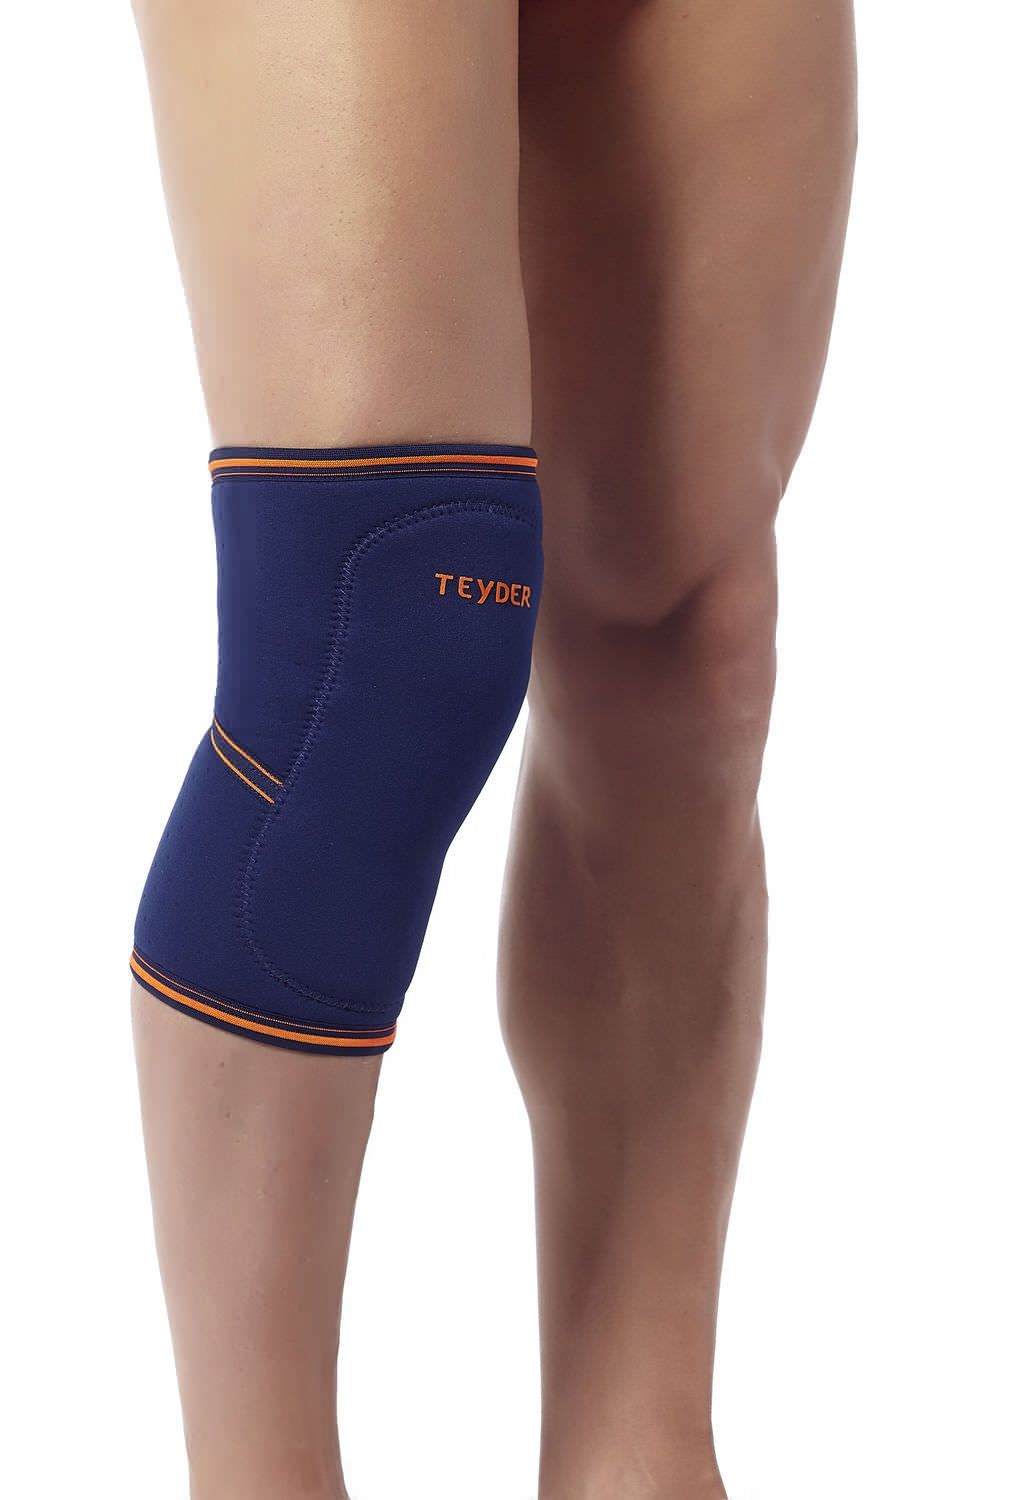 Knee sleeve (orthopedic immobilization) Neothermik Teyder